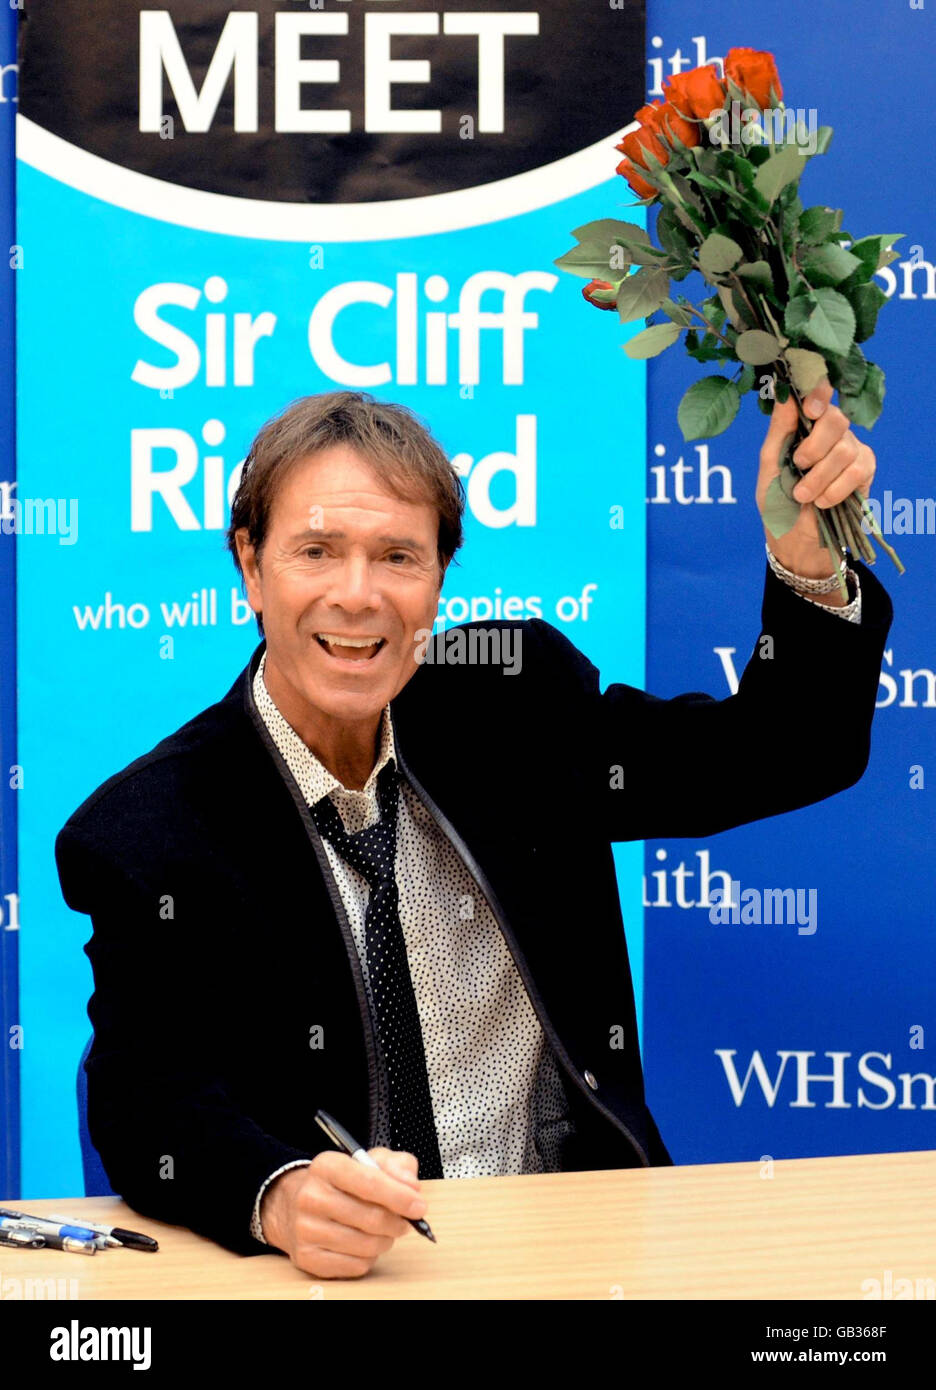 Sir Cliff Richard book signing Stock Photo